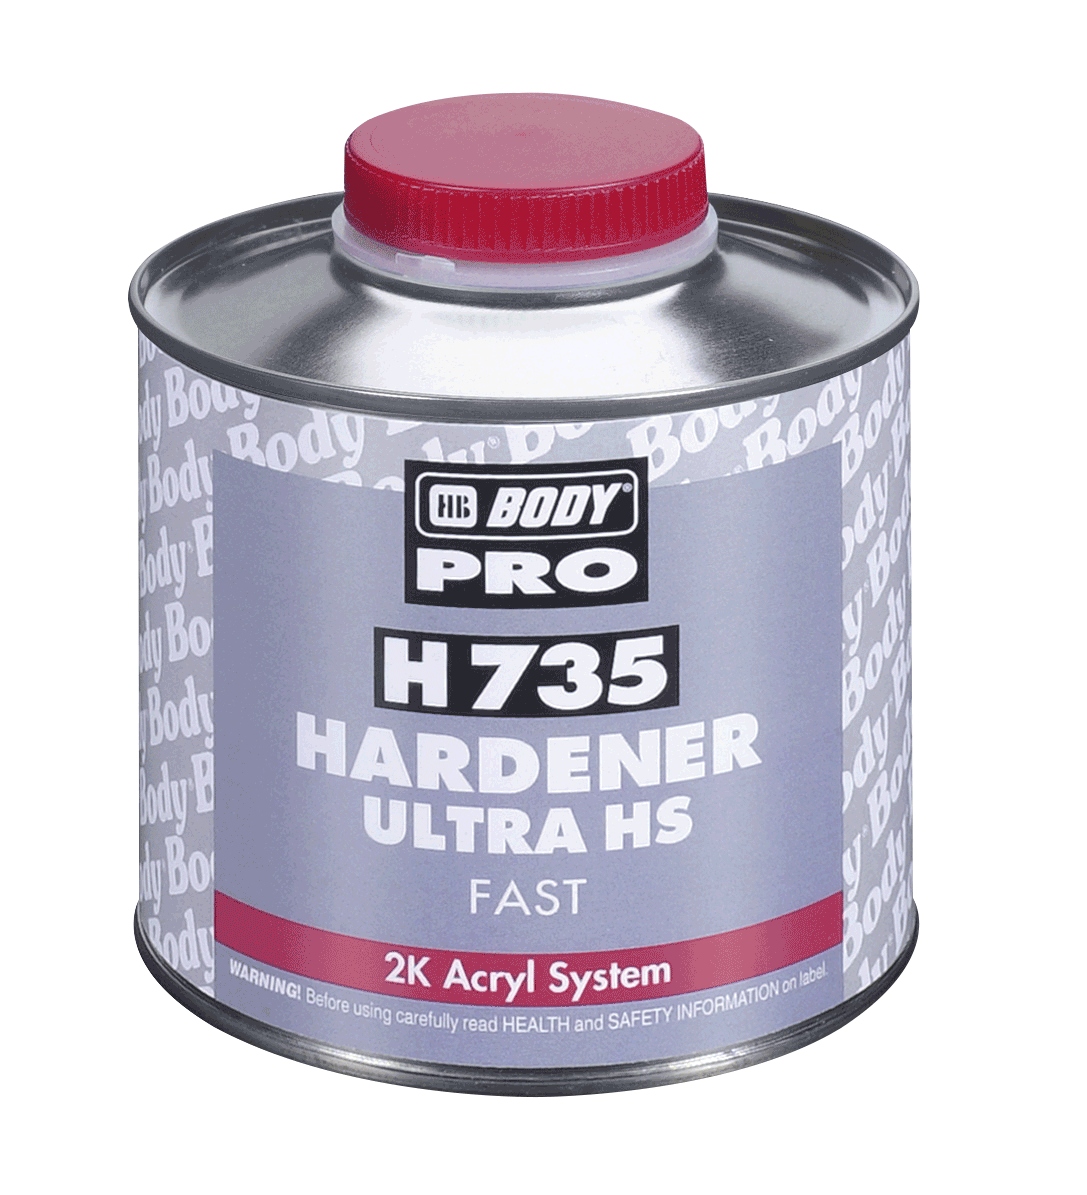 HB BODY Body 735 Hardener fast  500ml